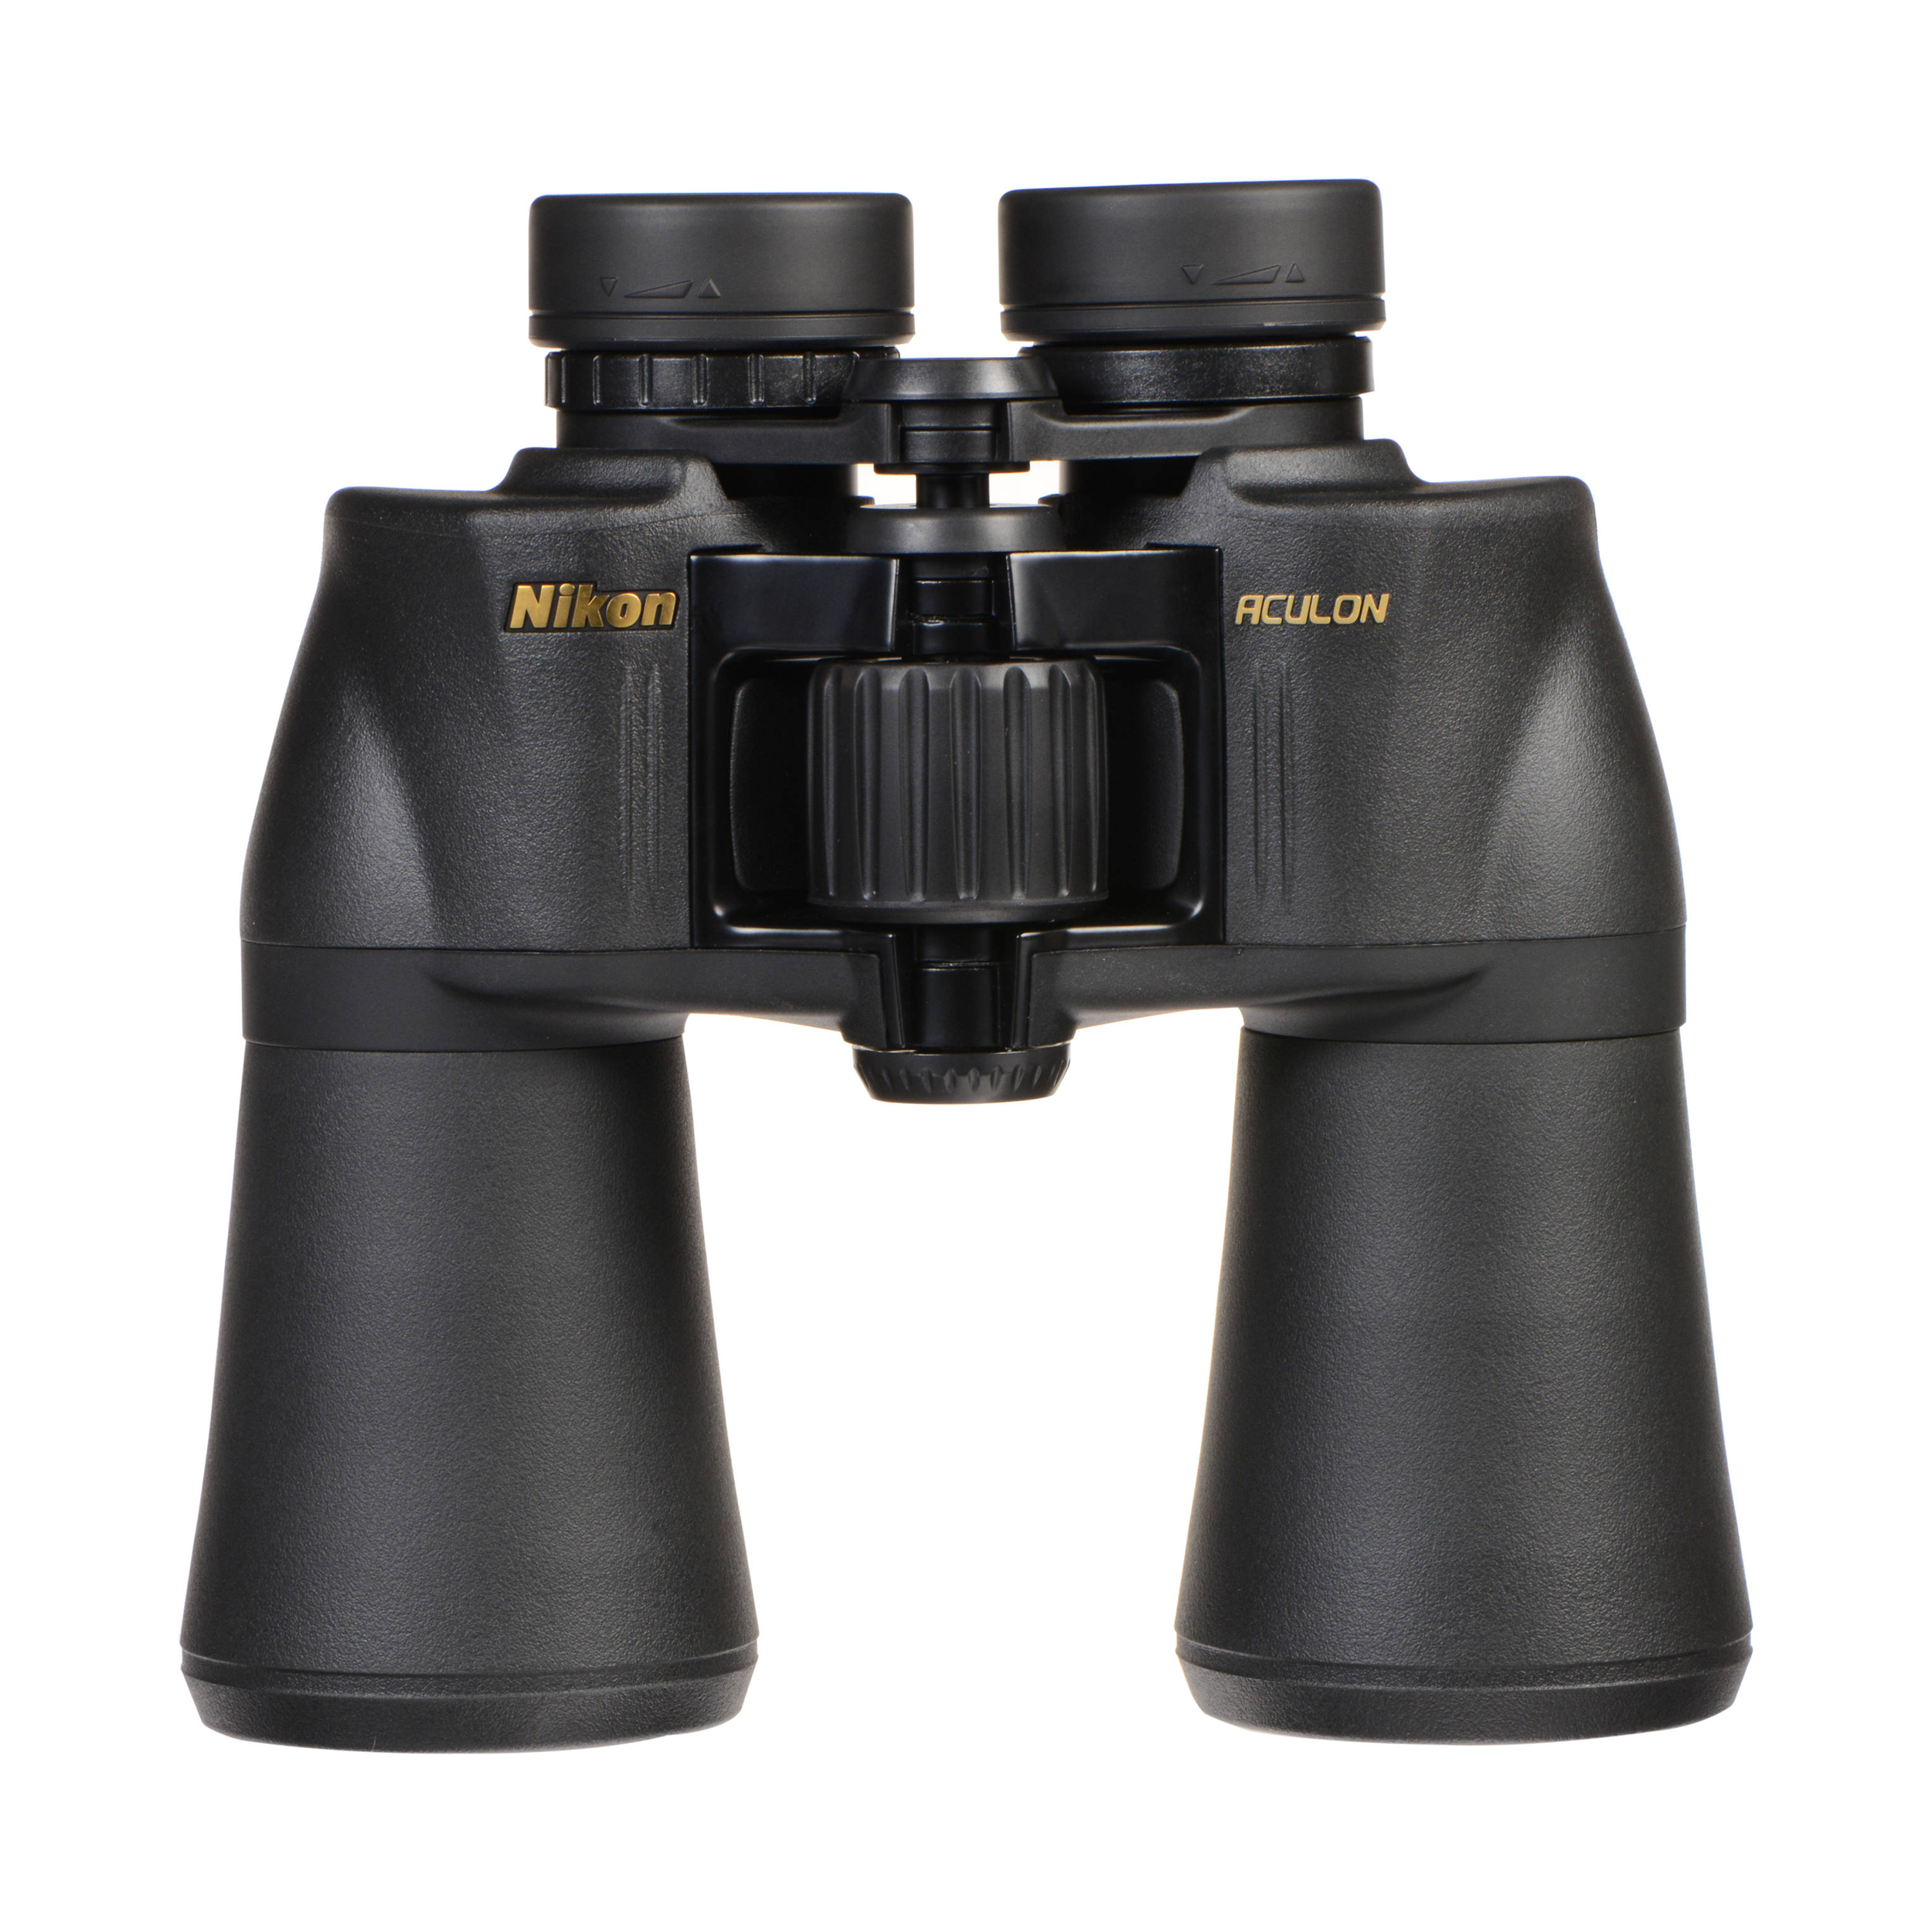 Binoculaires Nikon Aculon A211 - 16x50